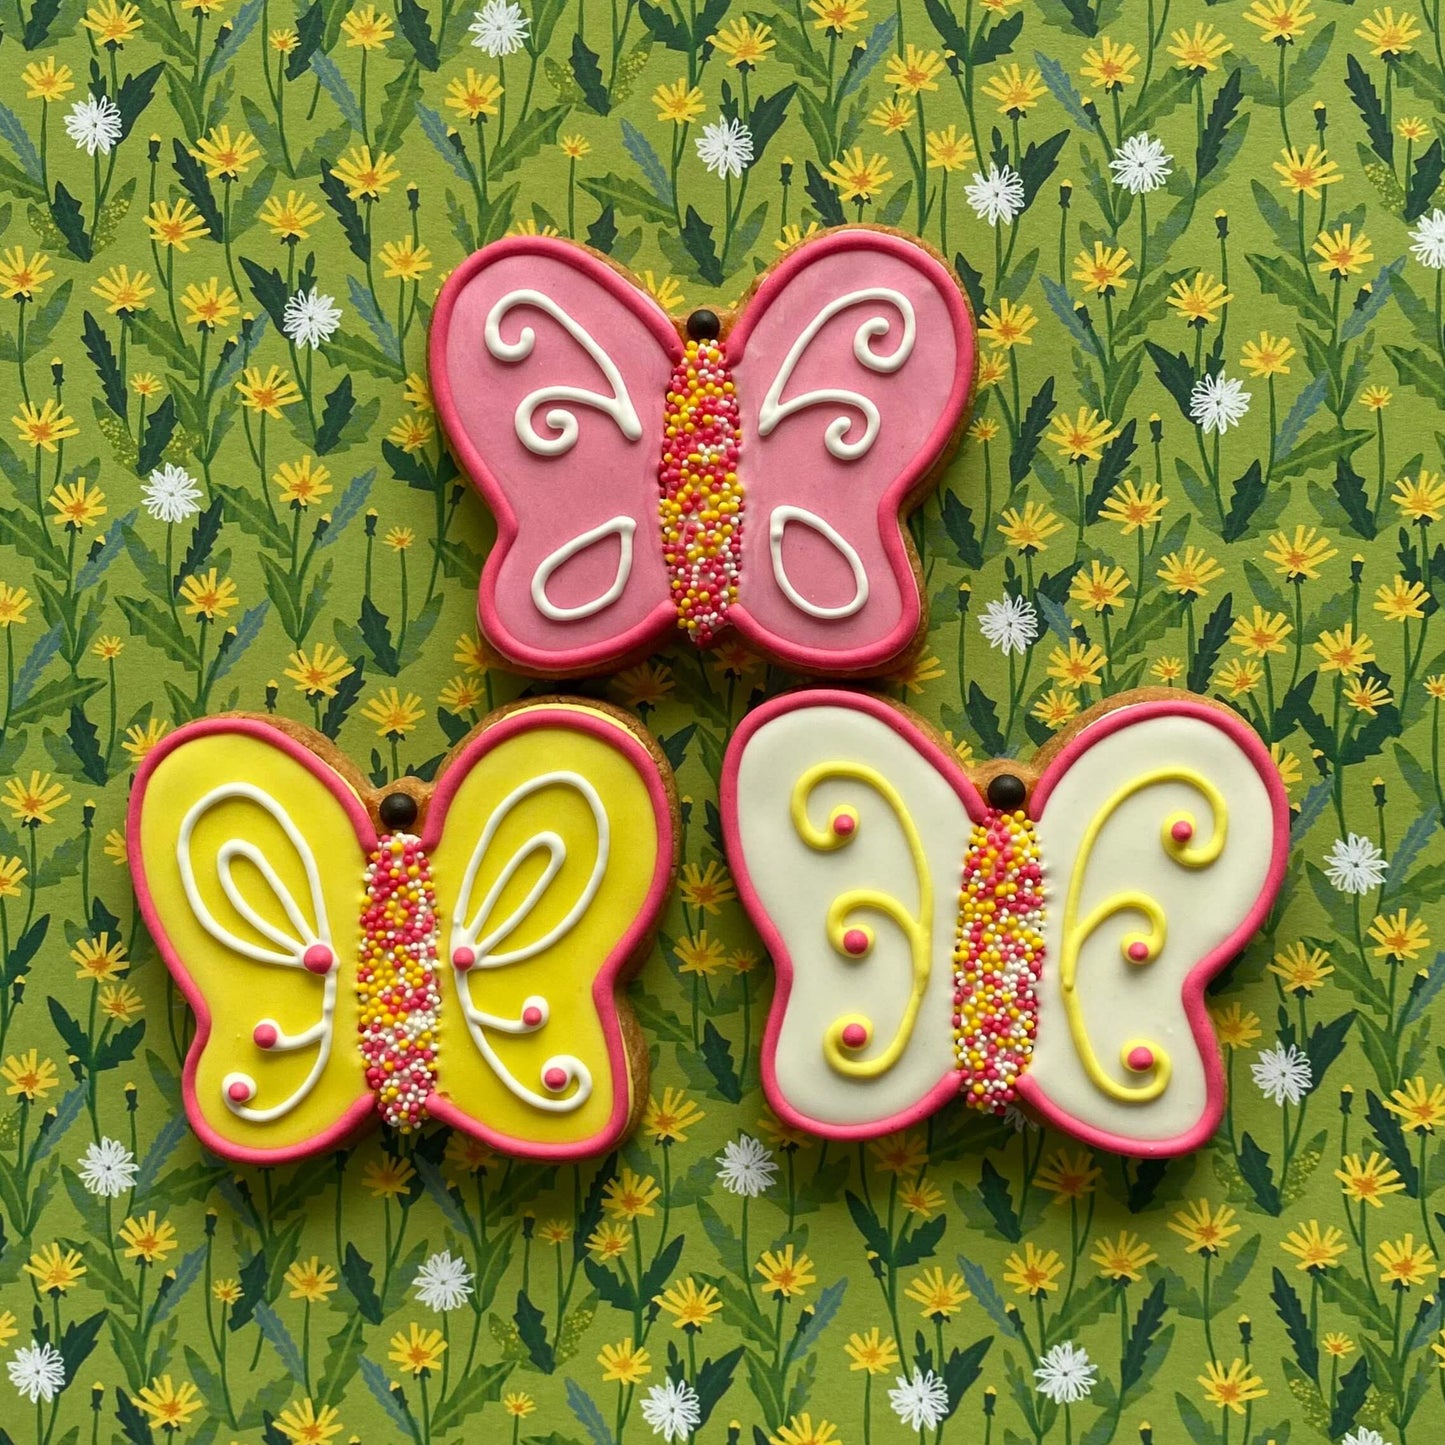 Butterfly sugar cookies